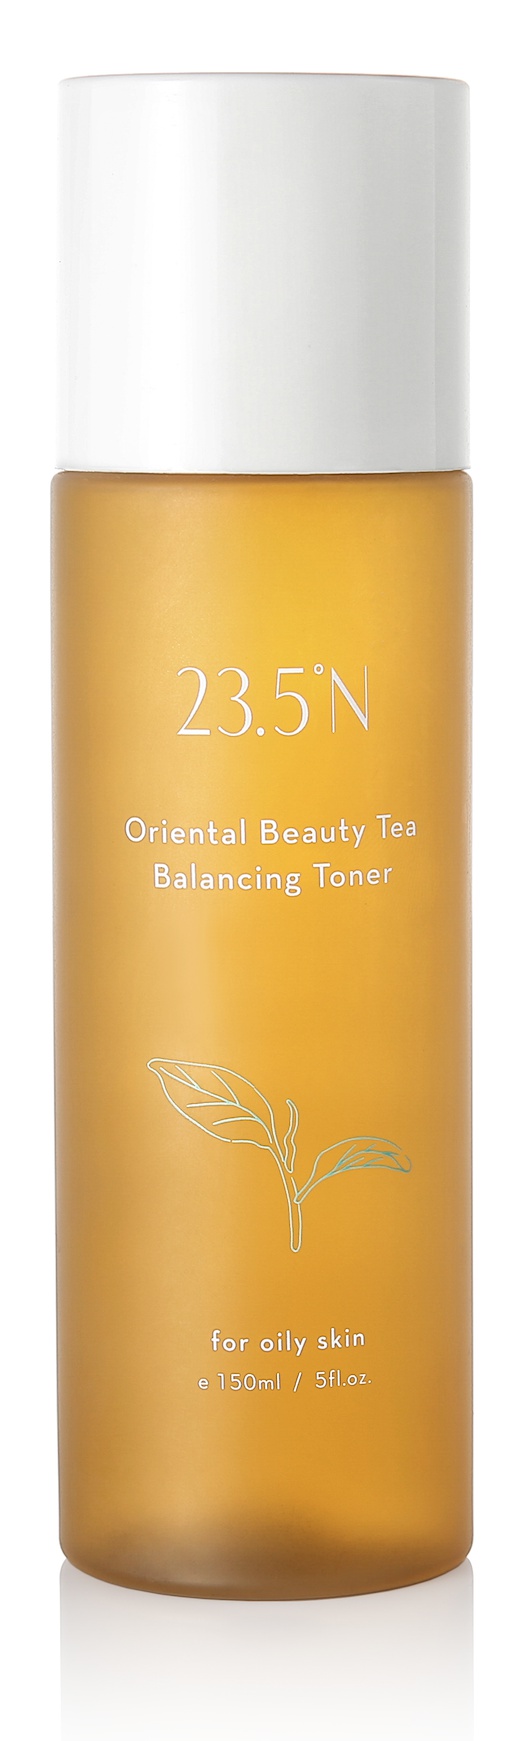 23.5N Oriental Beauty Tea Balancing Toner